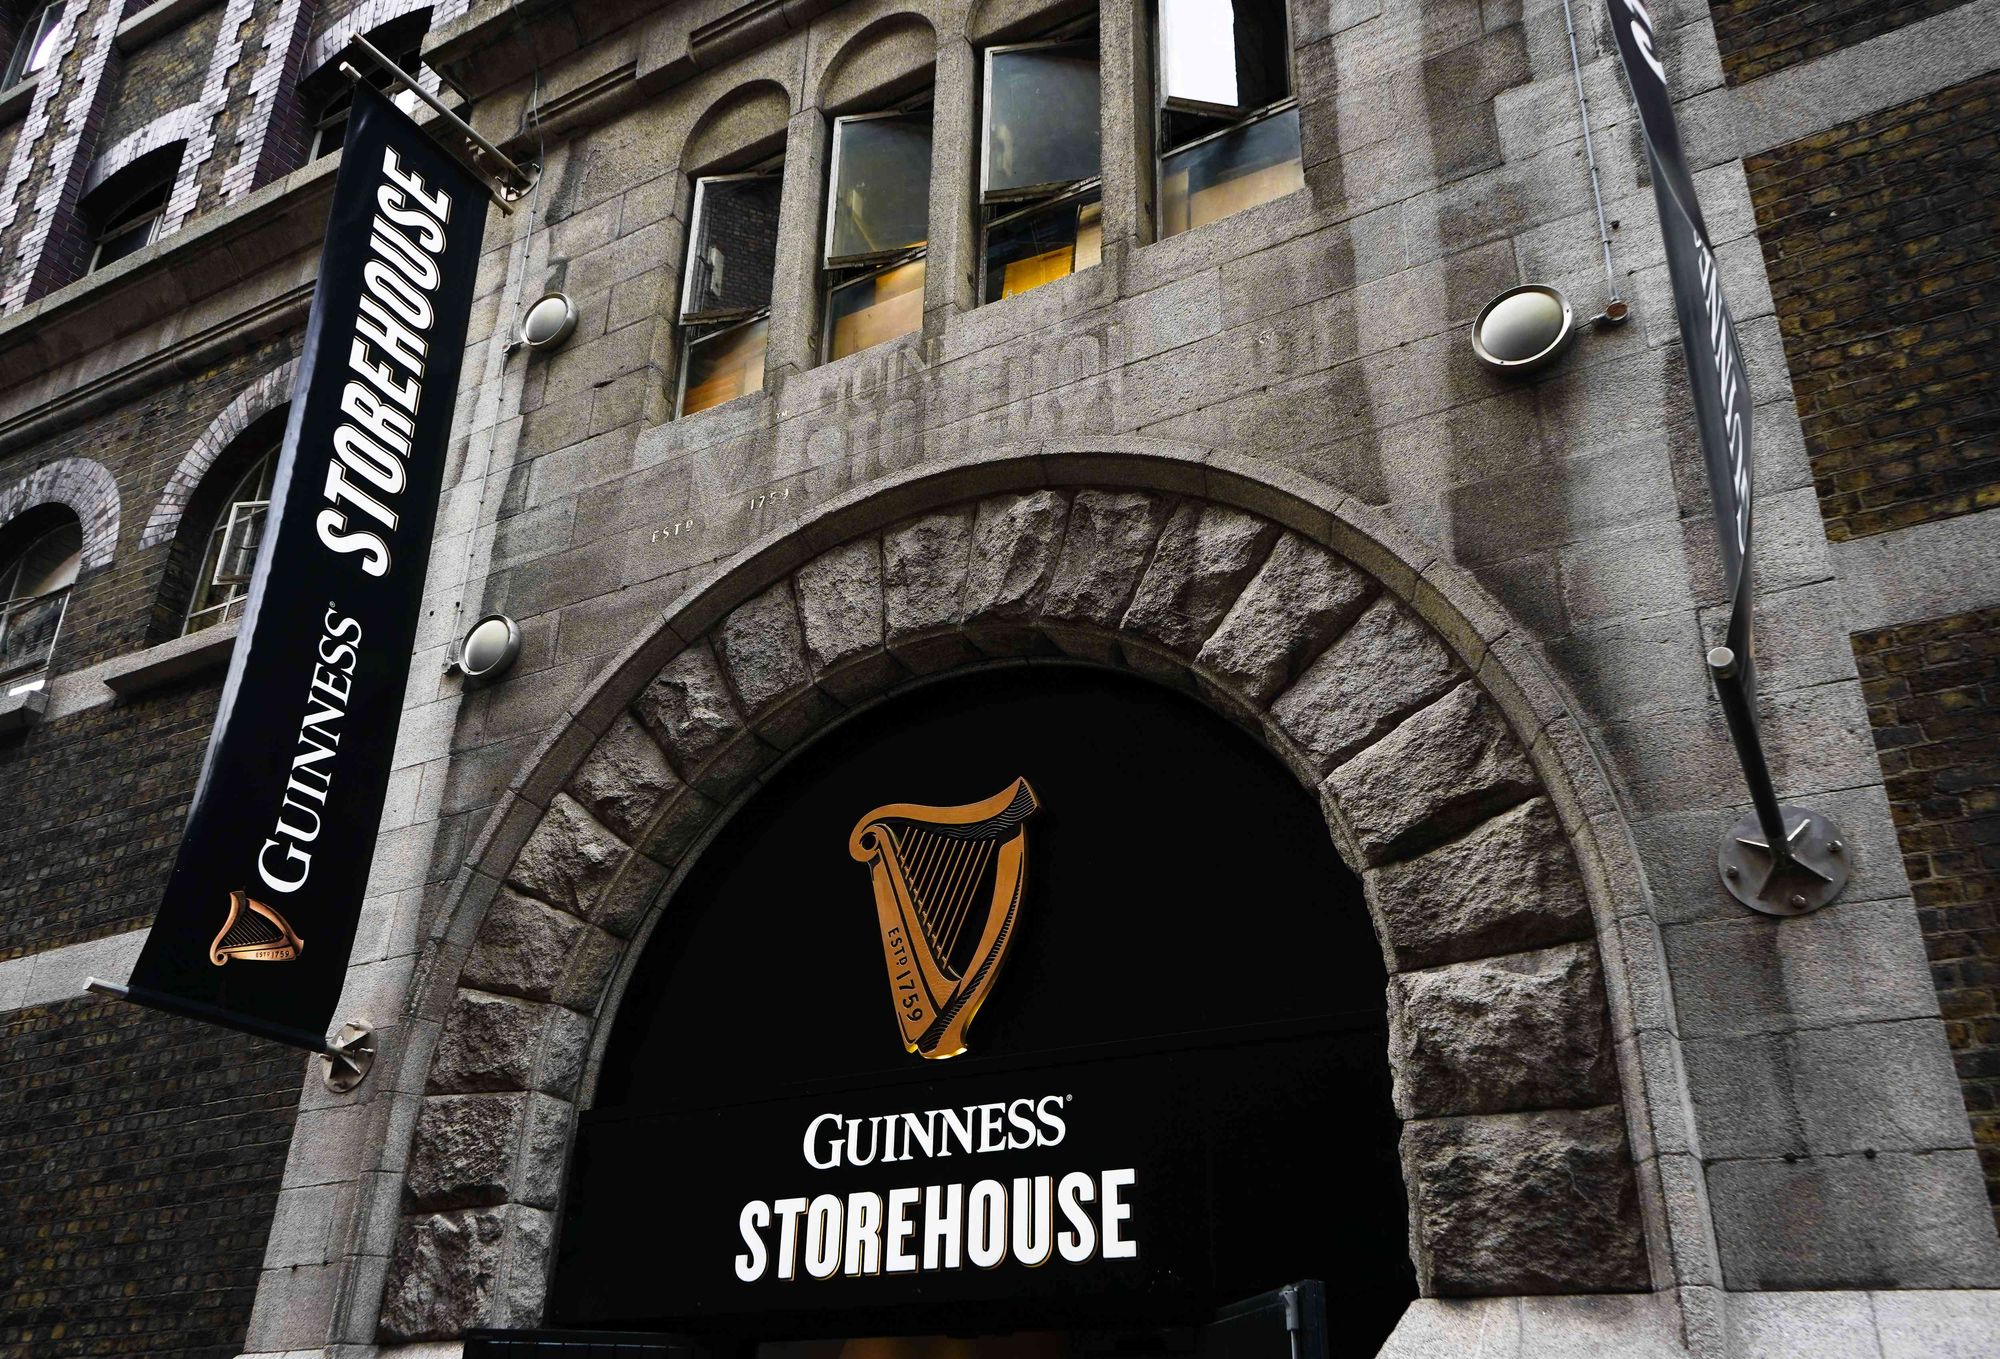 Explore the Guinness Storehouse